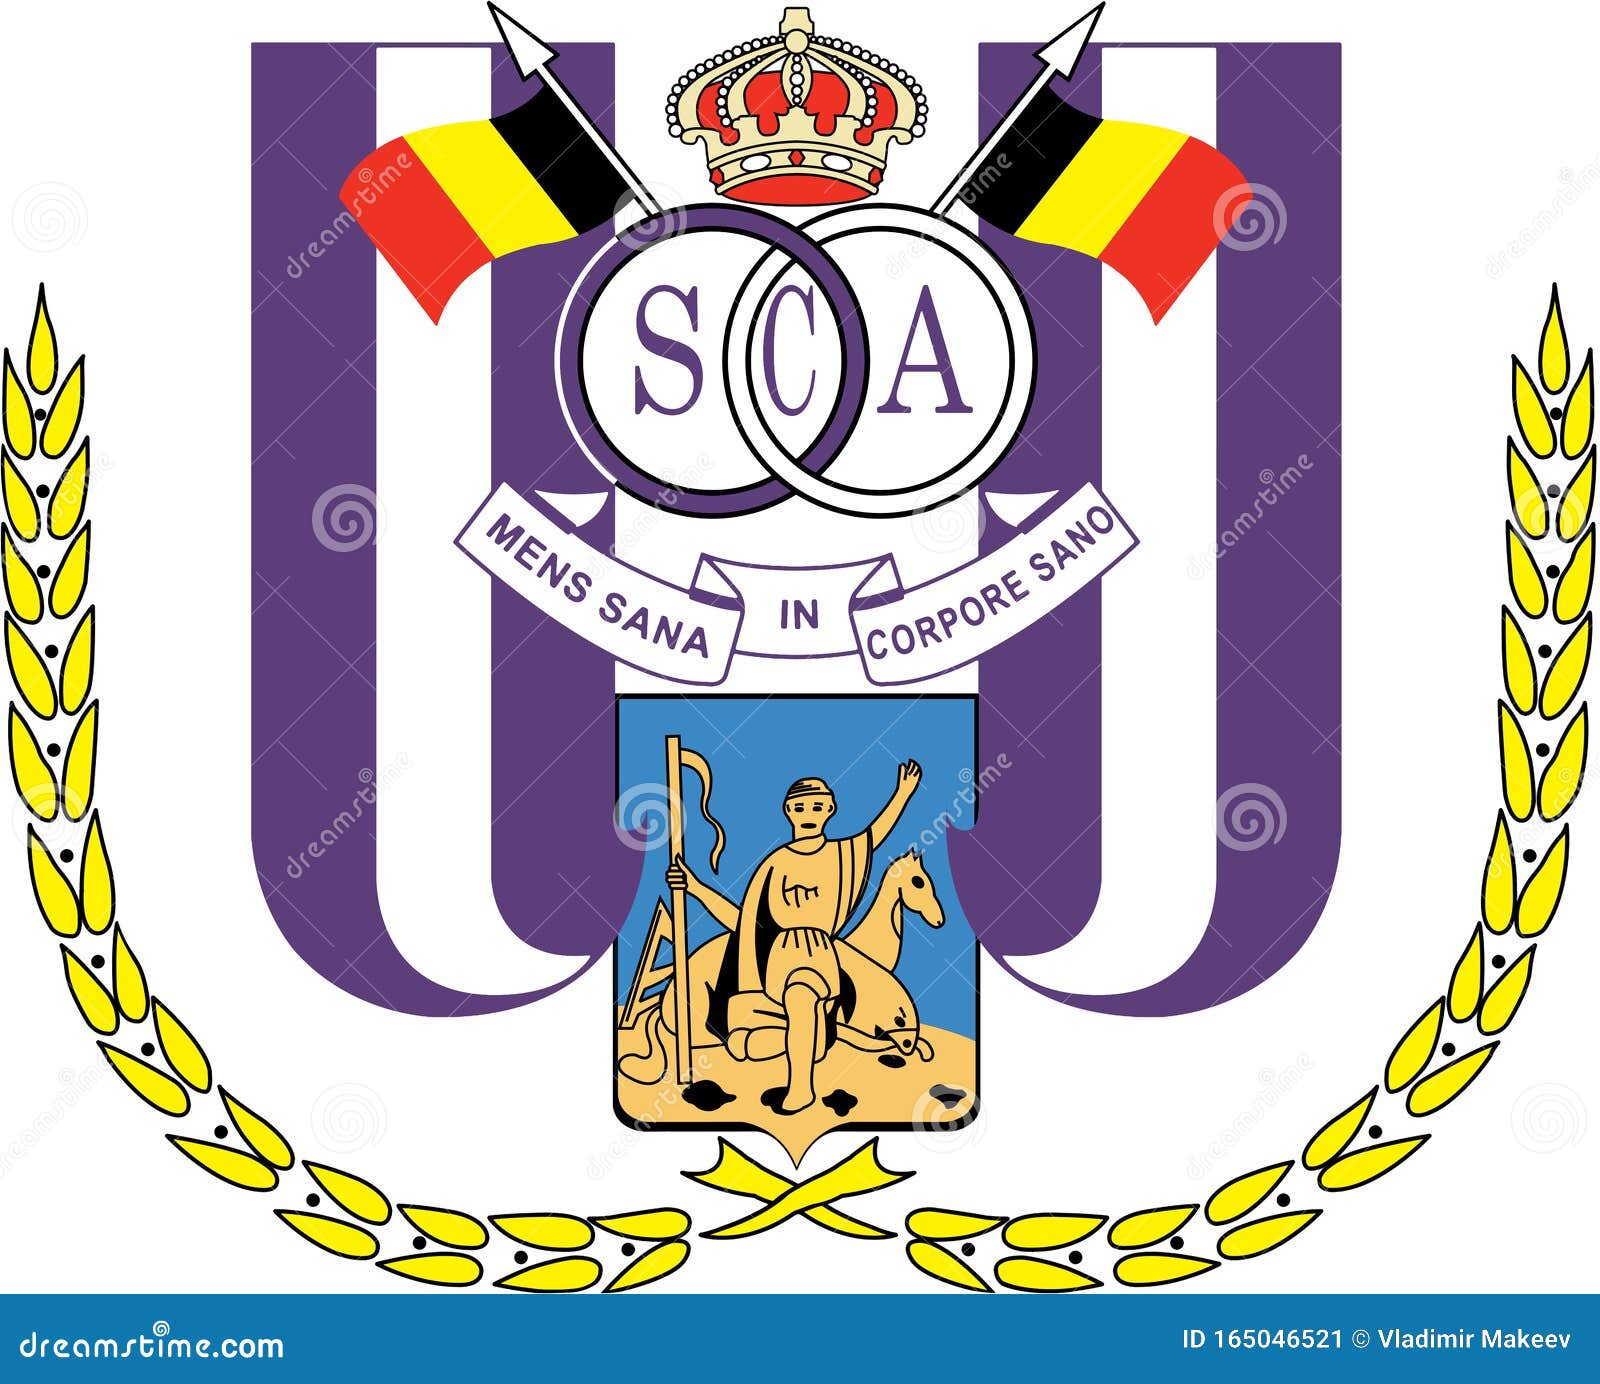 The Emblem Of The Football Club Royal Sporting Club Anderlecht Belgium Editorial Photo Illustration Of Purple Shield 165046521